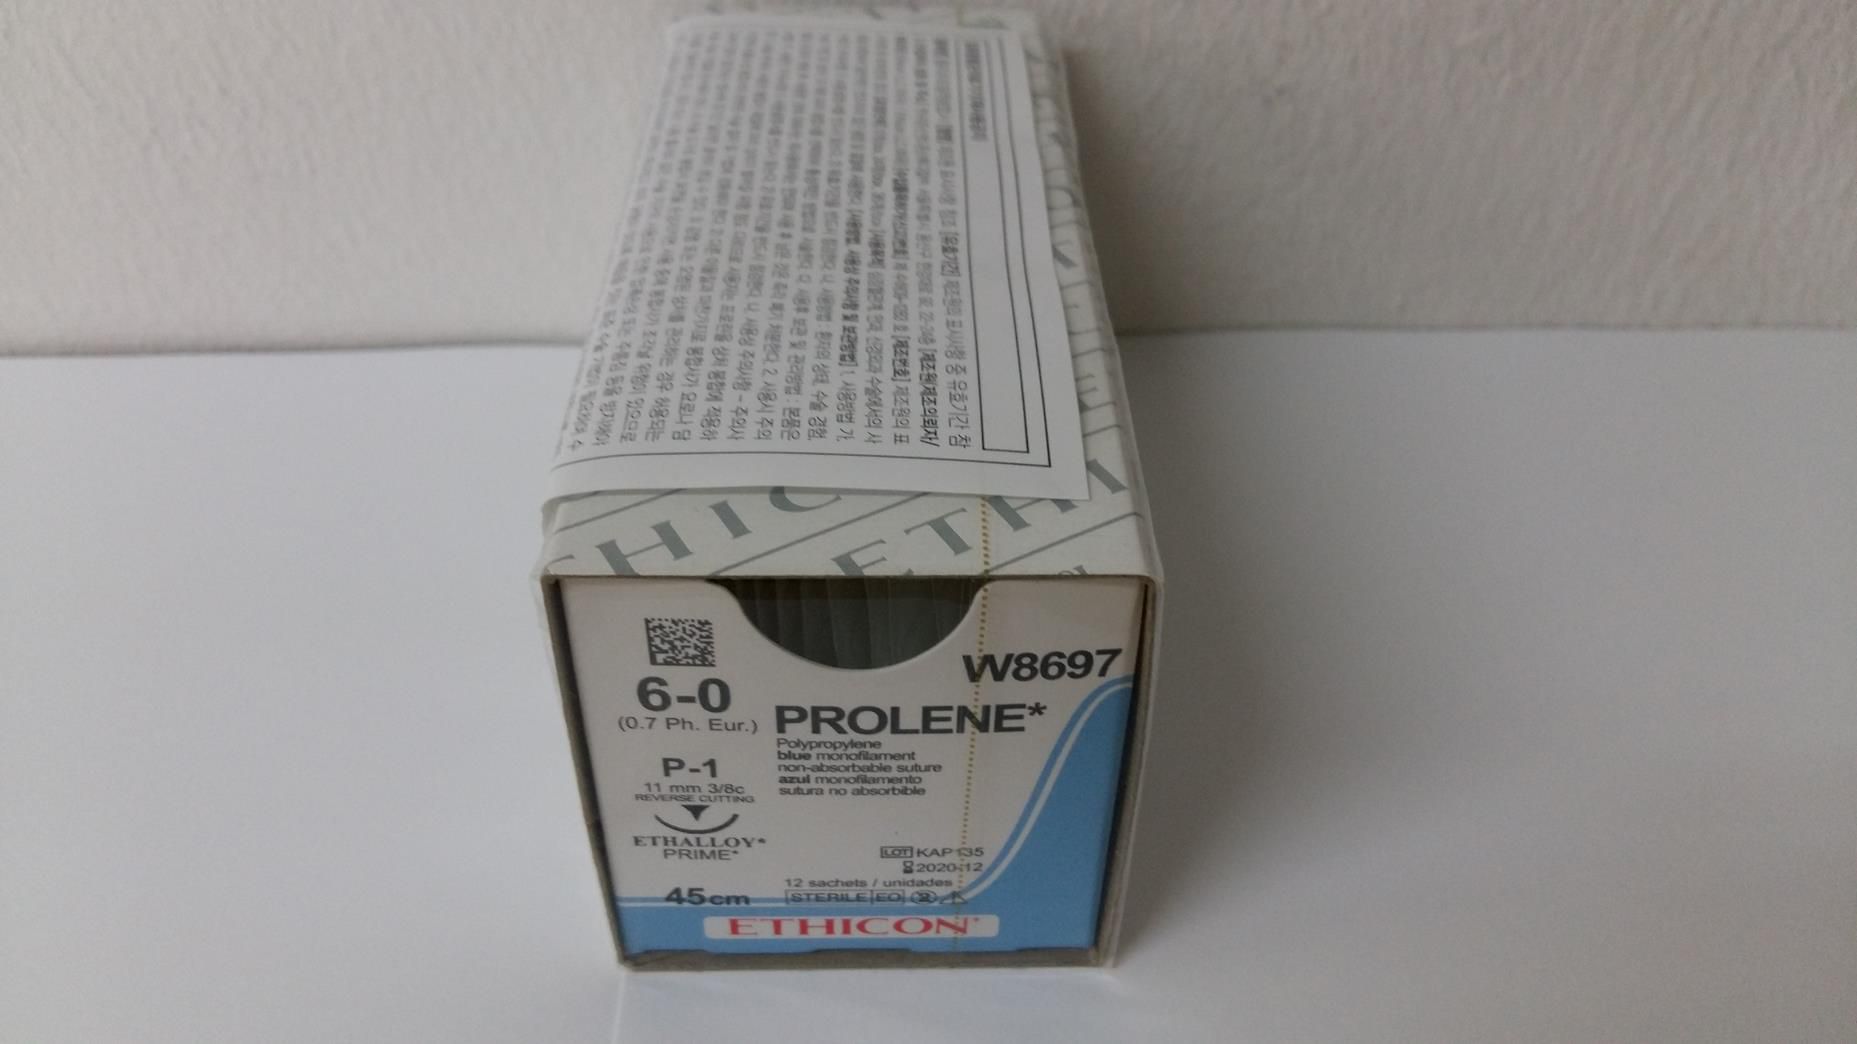 Prolene 0.7 6/0 45 cm kék USP6-0 S/A P-1 PRM (12 darab)